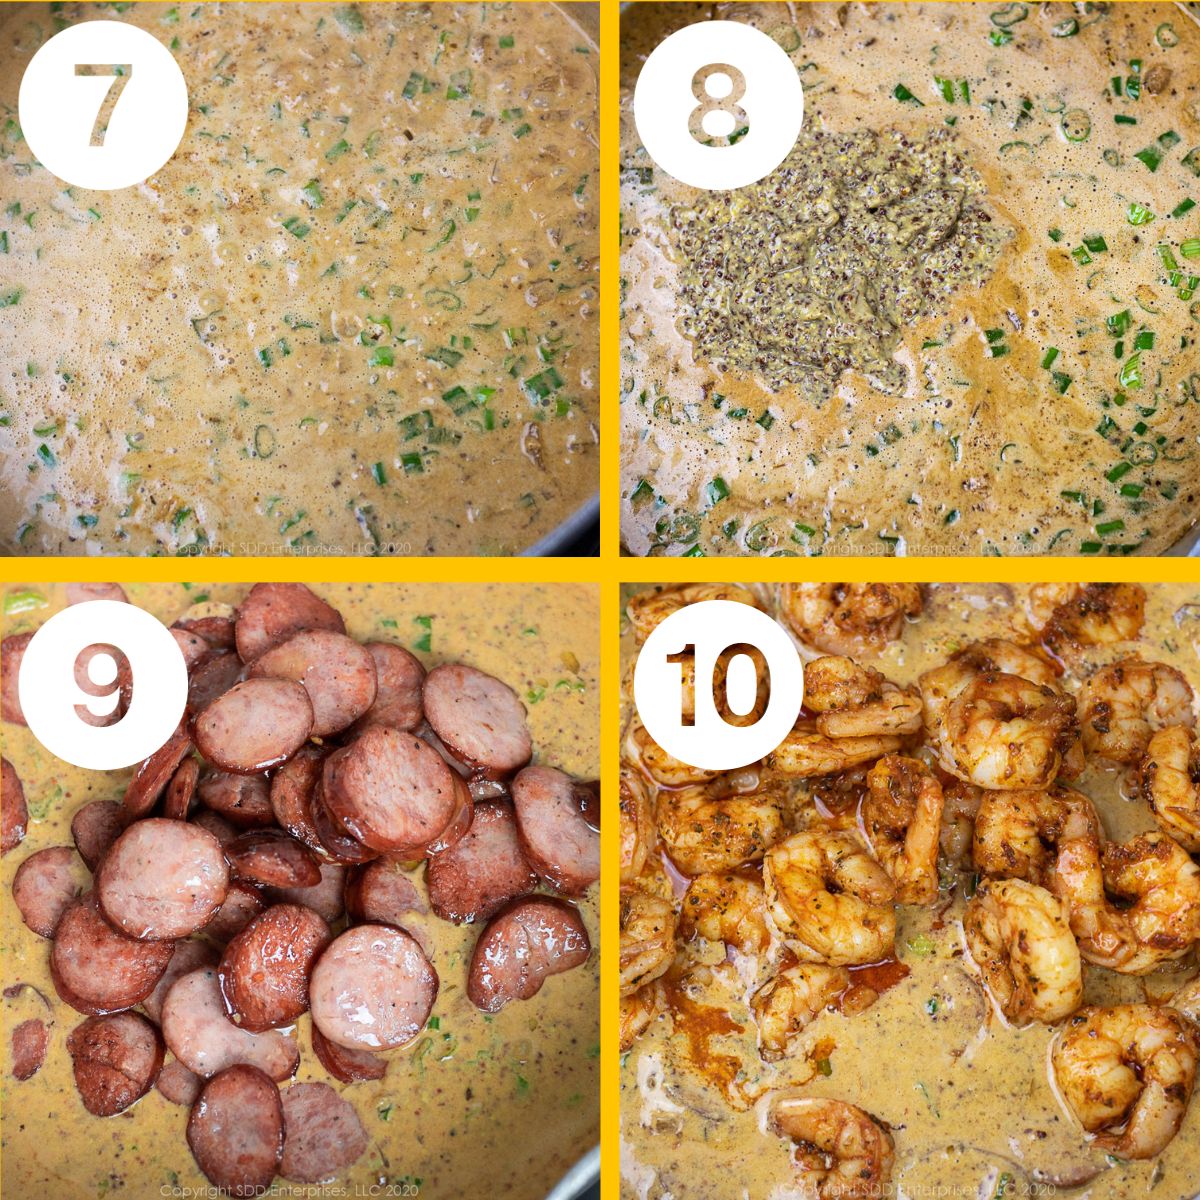 Steps to prepare shrimp and andouille pasta.